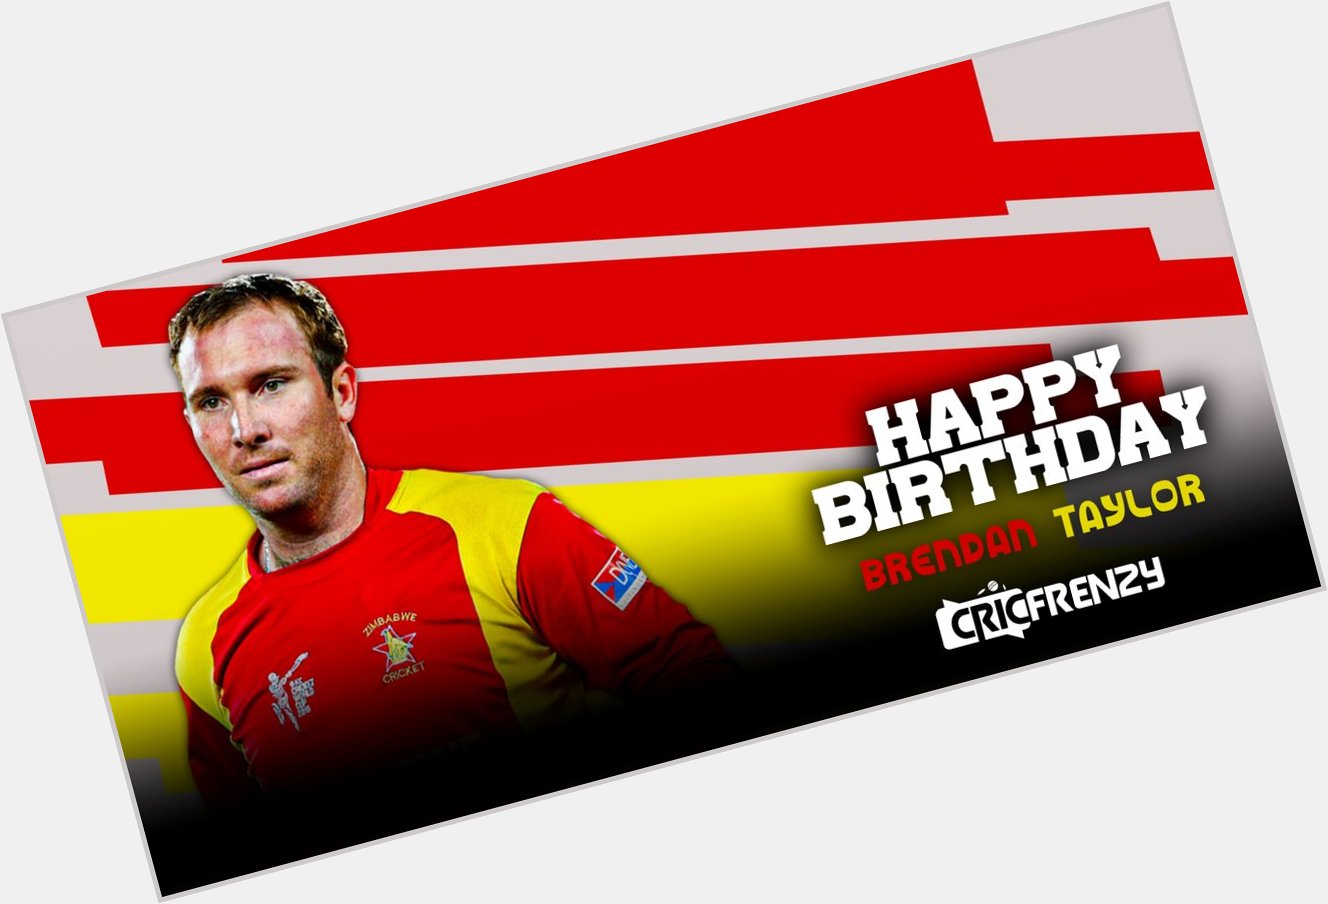 Most ODI centuries for Zimbabwe cricket history.
Happy Birthday Brendan Taylor     